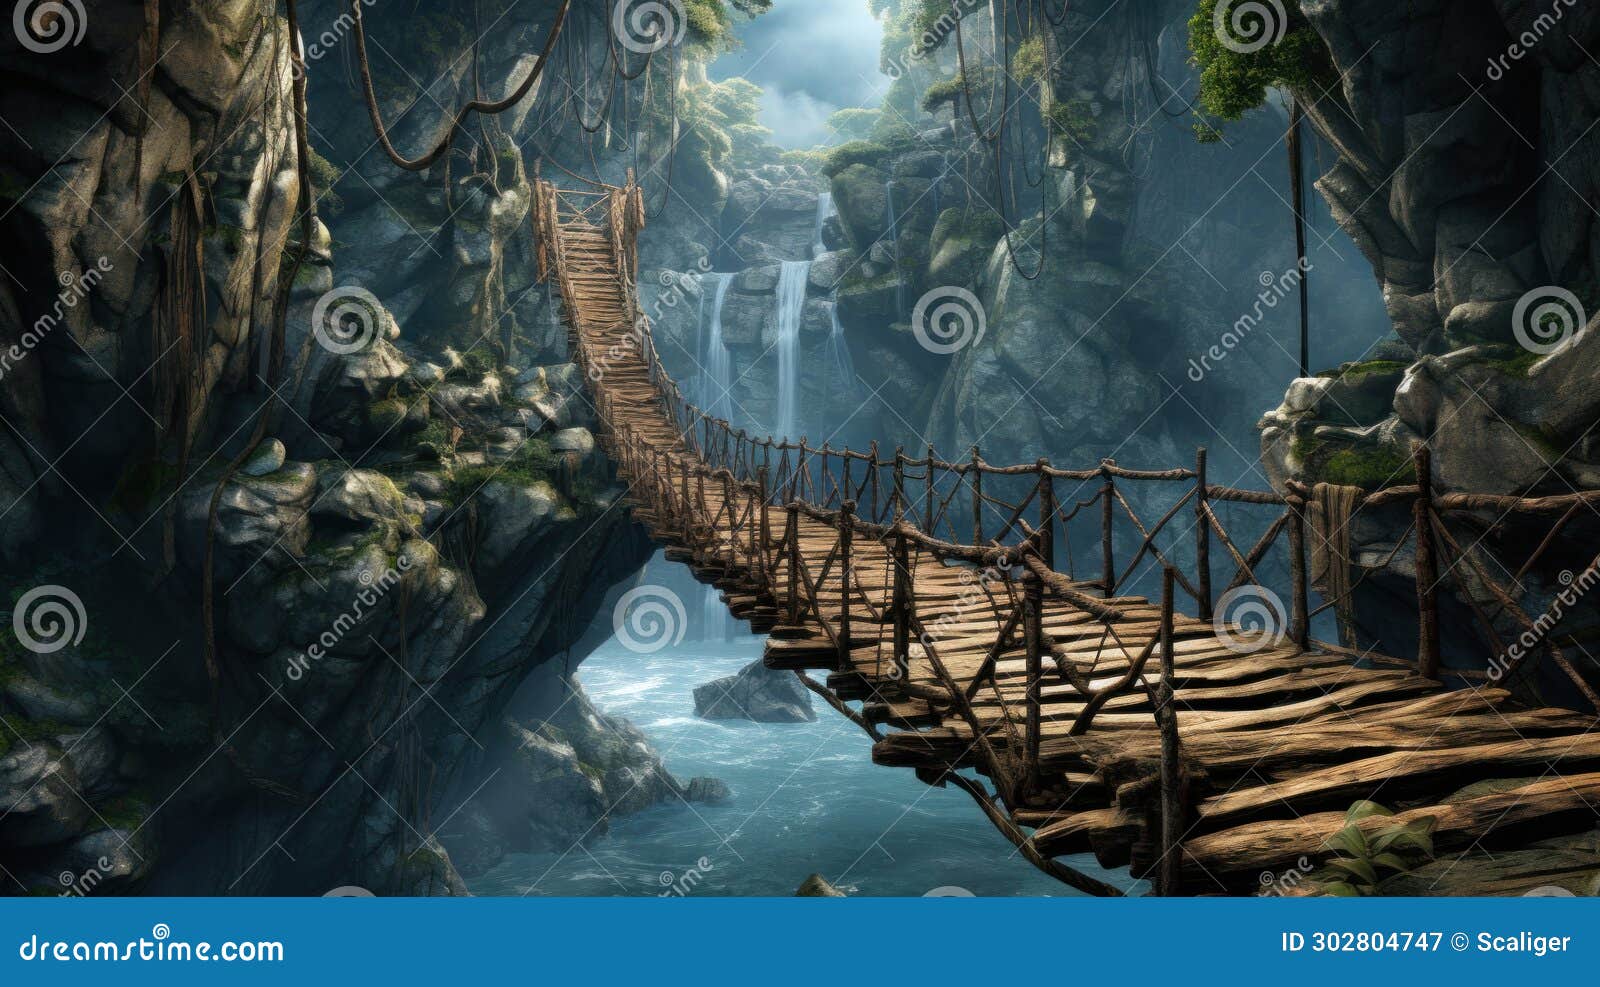 Wall Mural Adventure wooden rope jungle suspension bridge